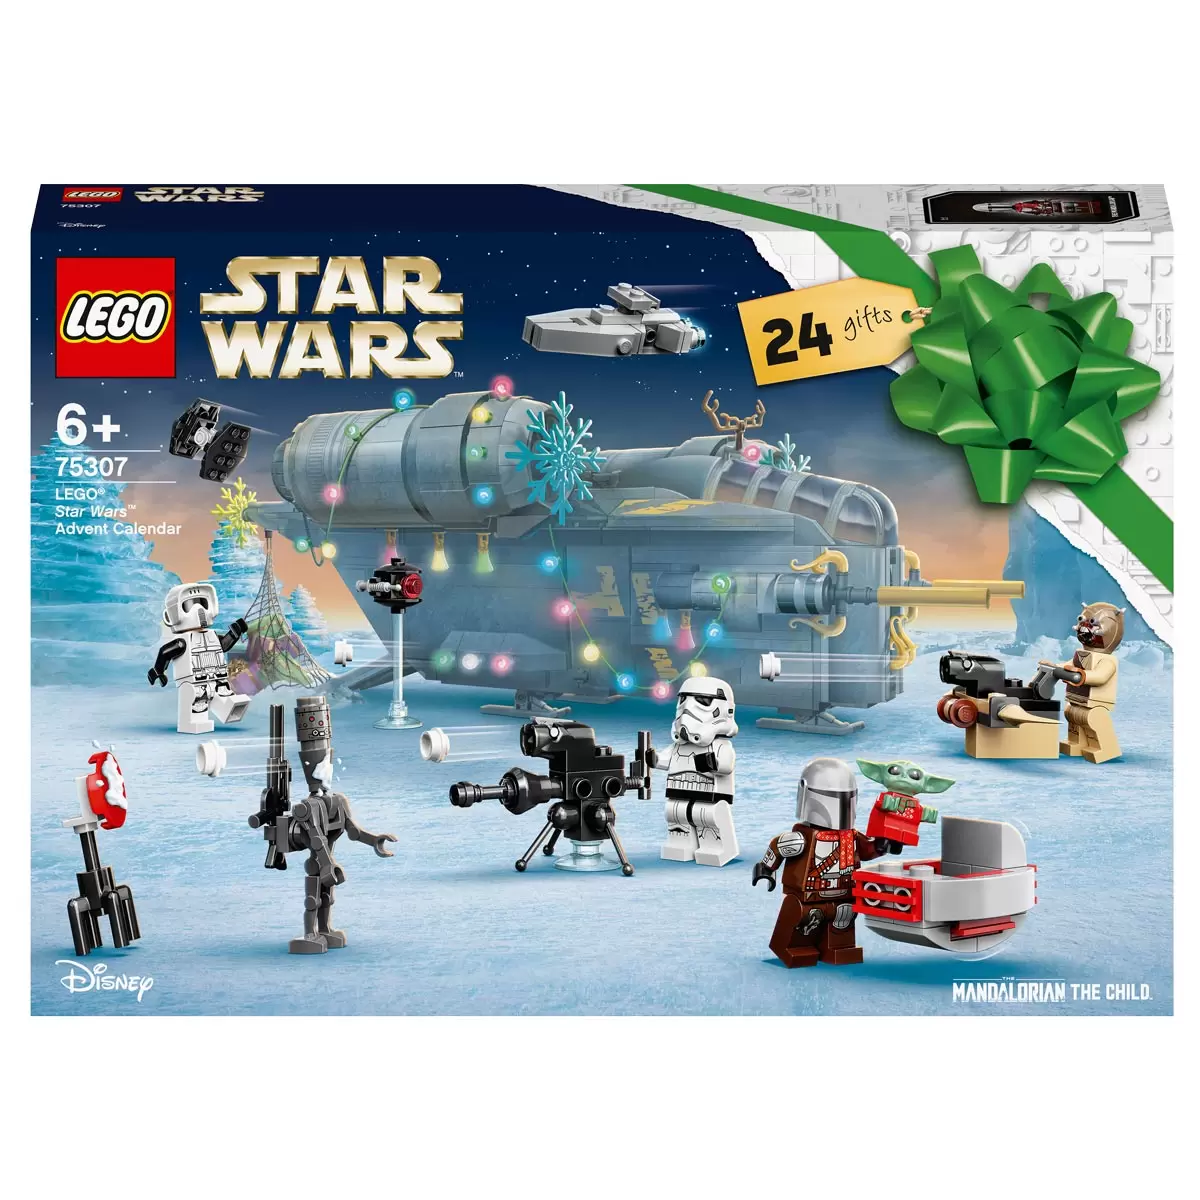 Buy LEGO Star Wars Advent Calendar Box Image at Costco.co.uk